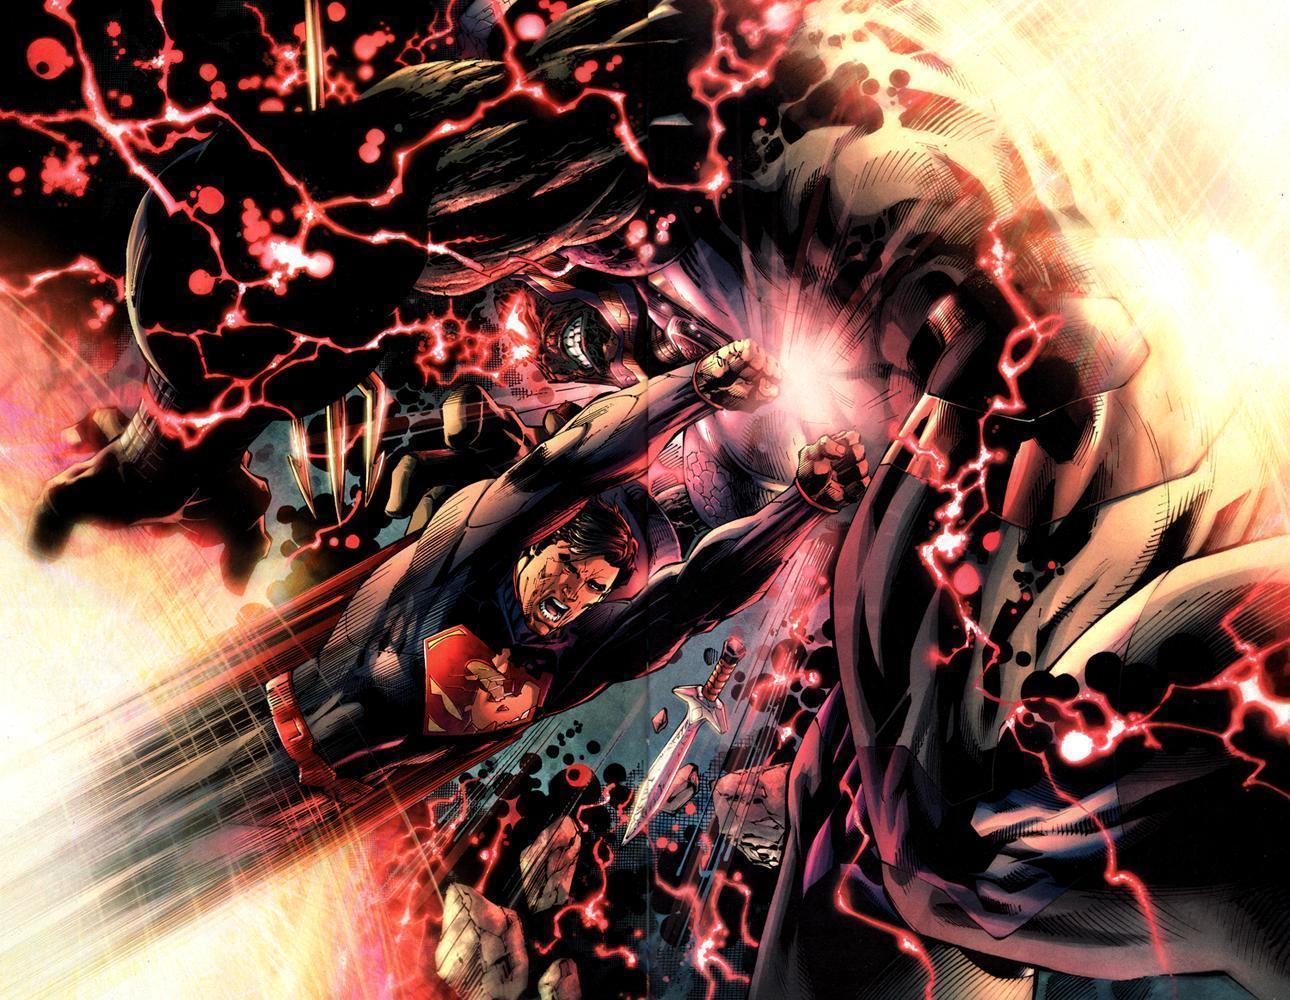 Best image about darkseid. Man of Steel